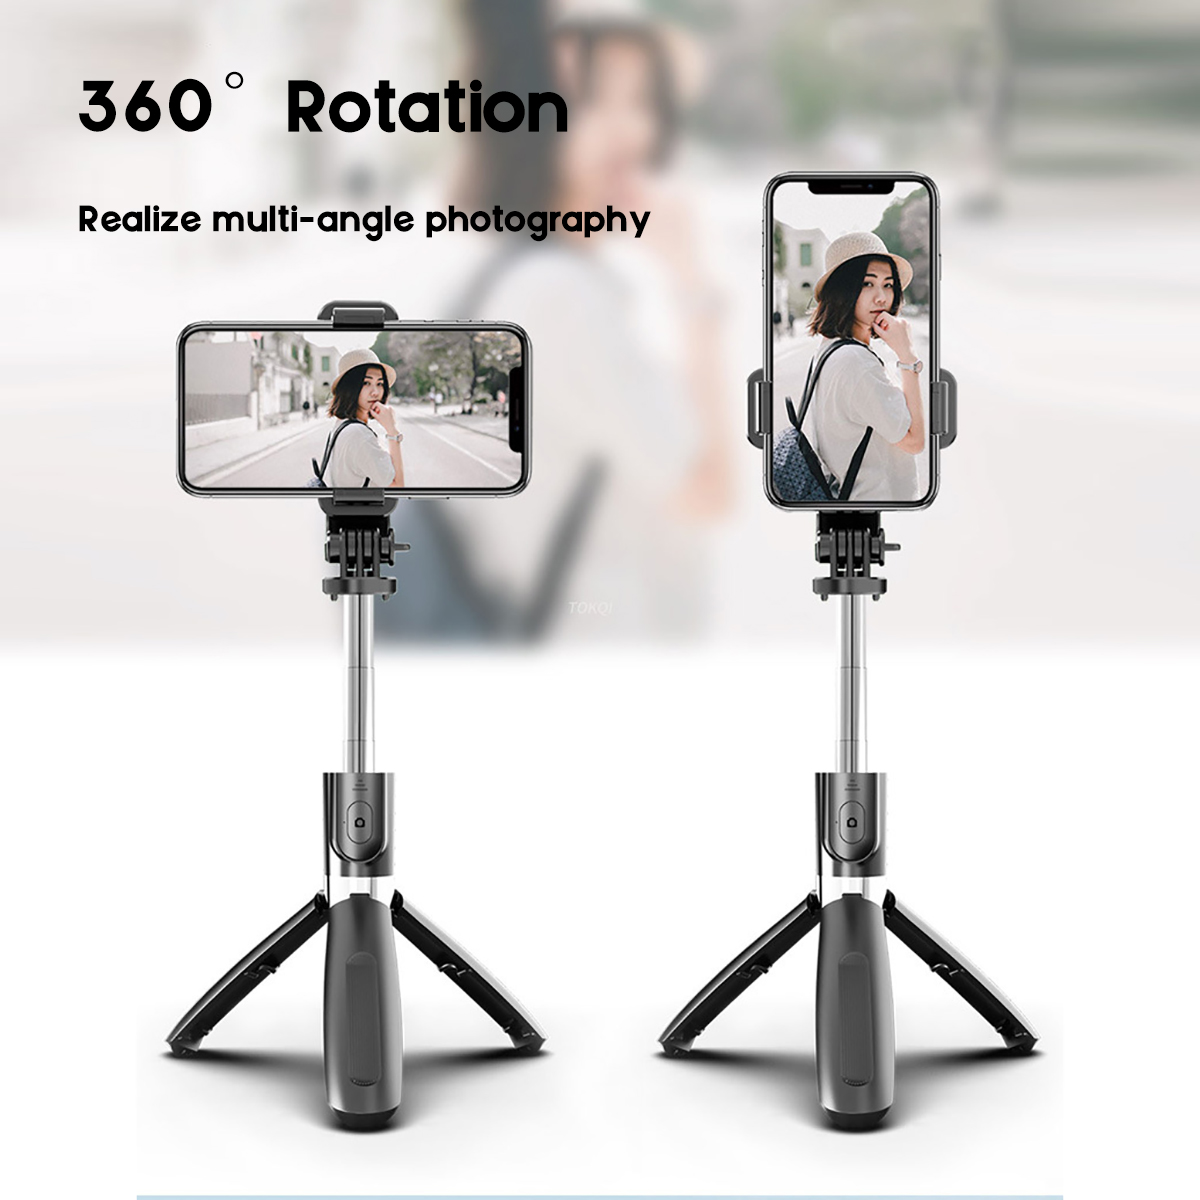 bluetooth-Control-360deg-Rotation-Stable-Tripod-Selfie-Stick-Wireless-Remote-Shutter-Multi-angle-Pro-1824451-2